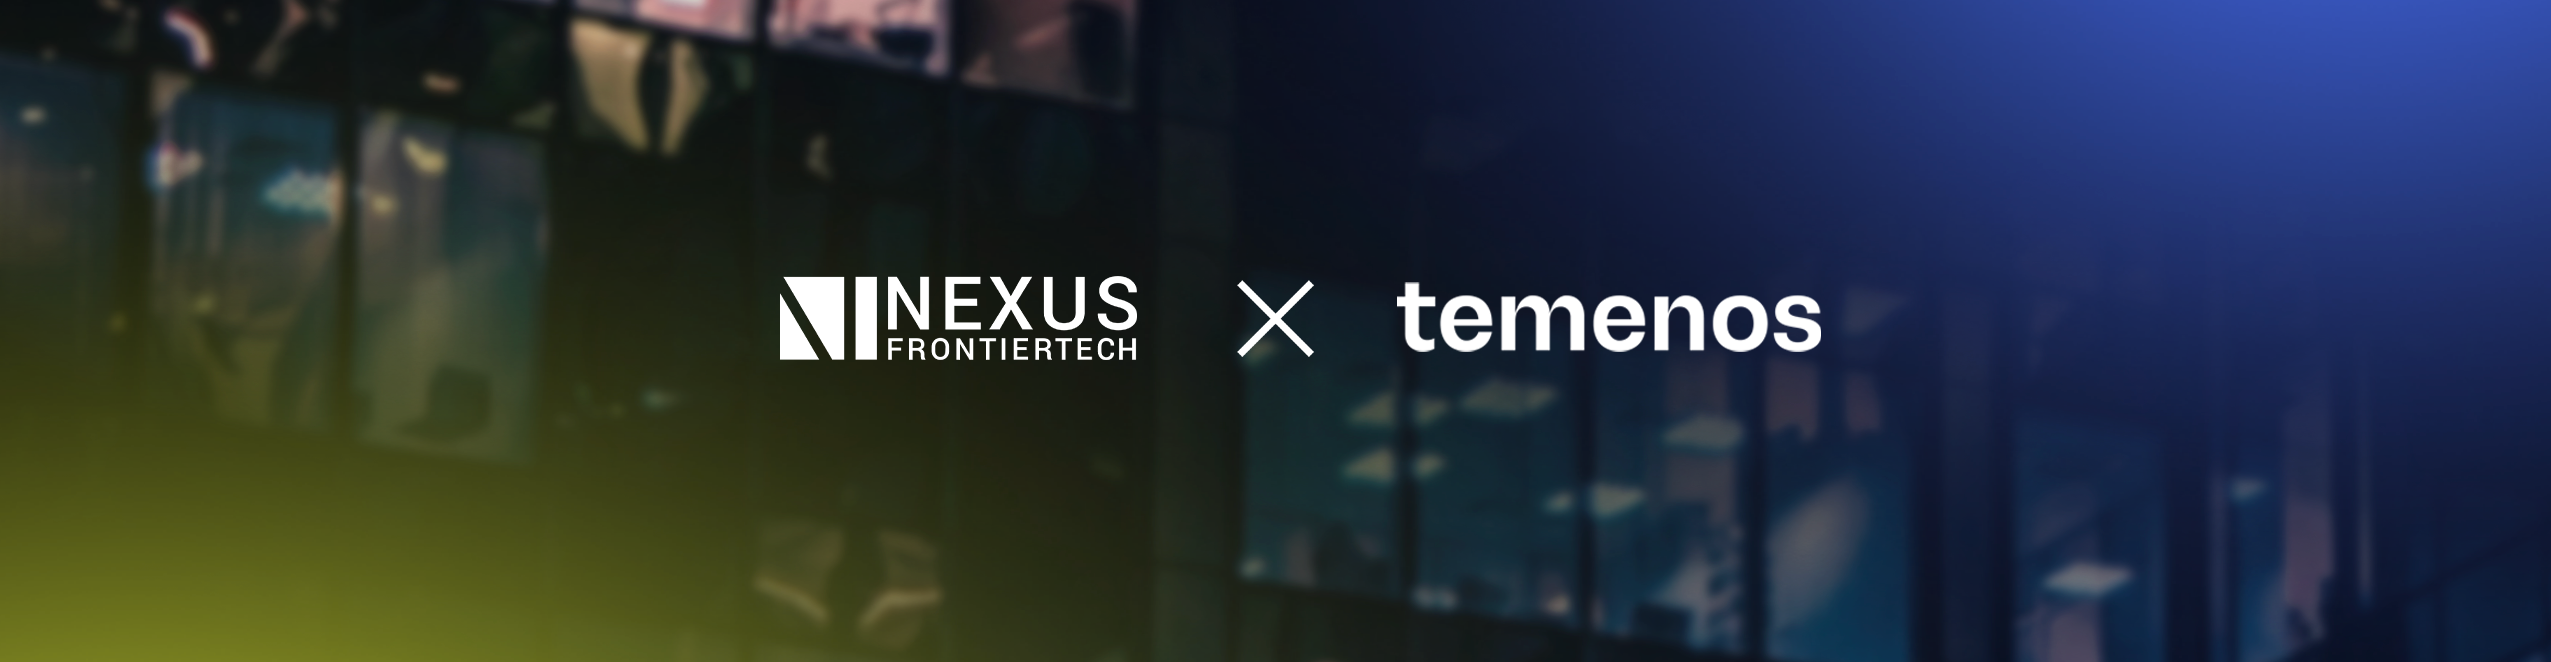 Nexus FrontierTech’s Intelligent Document Processing Now Available on Temenos Exchange